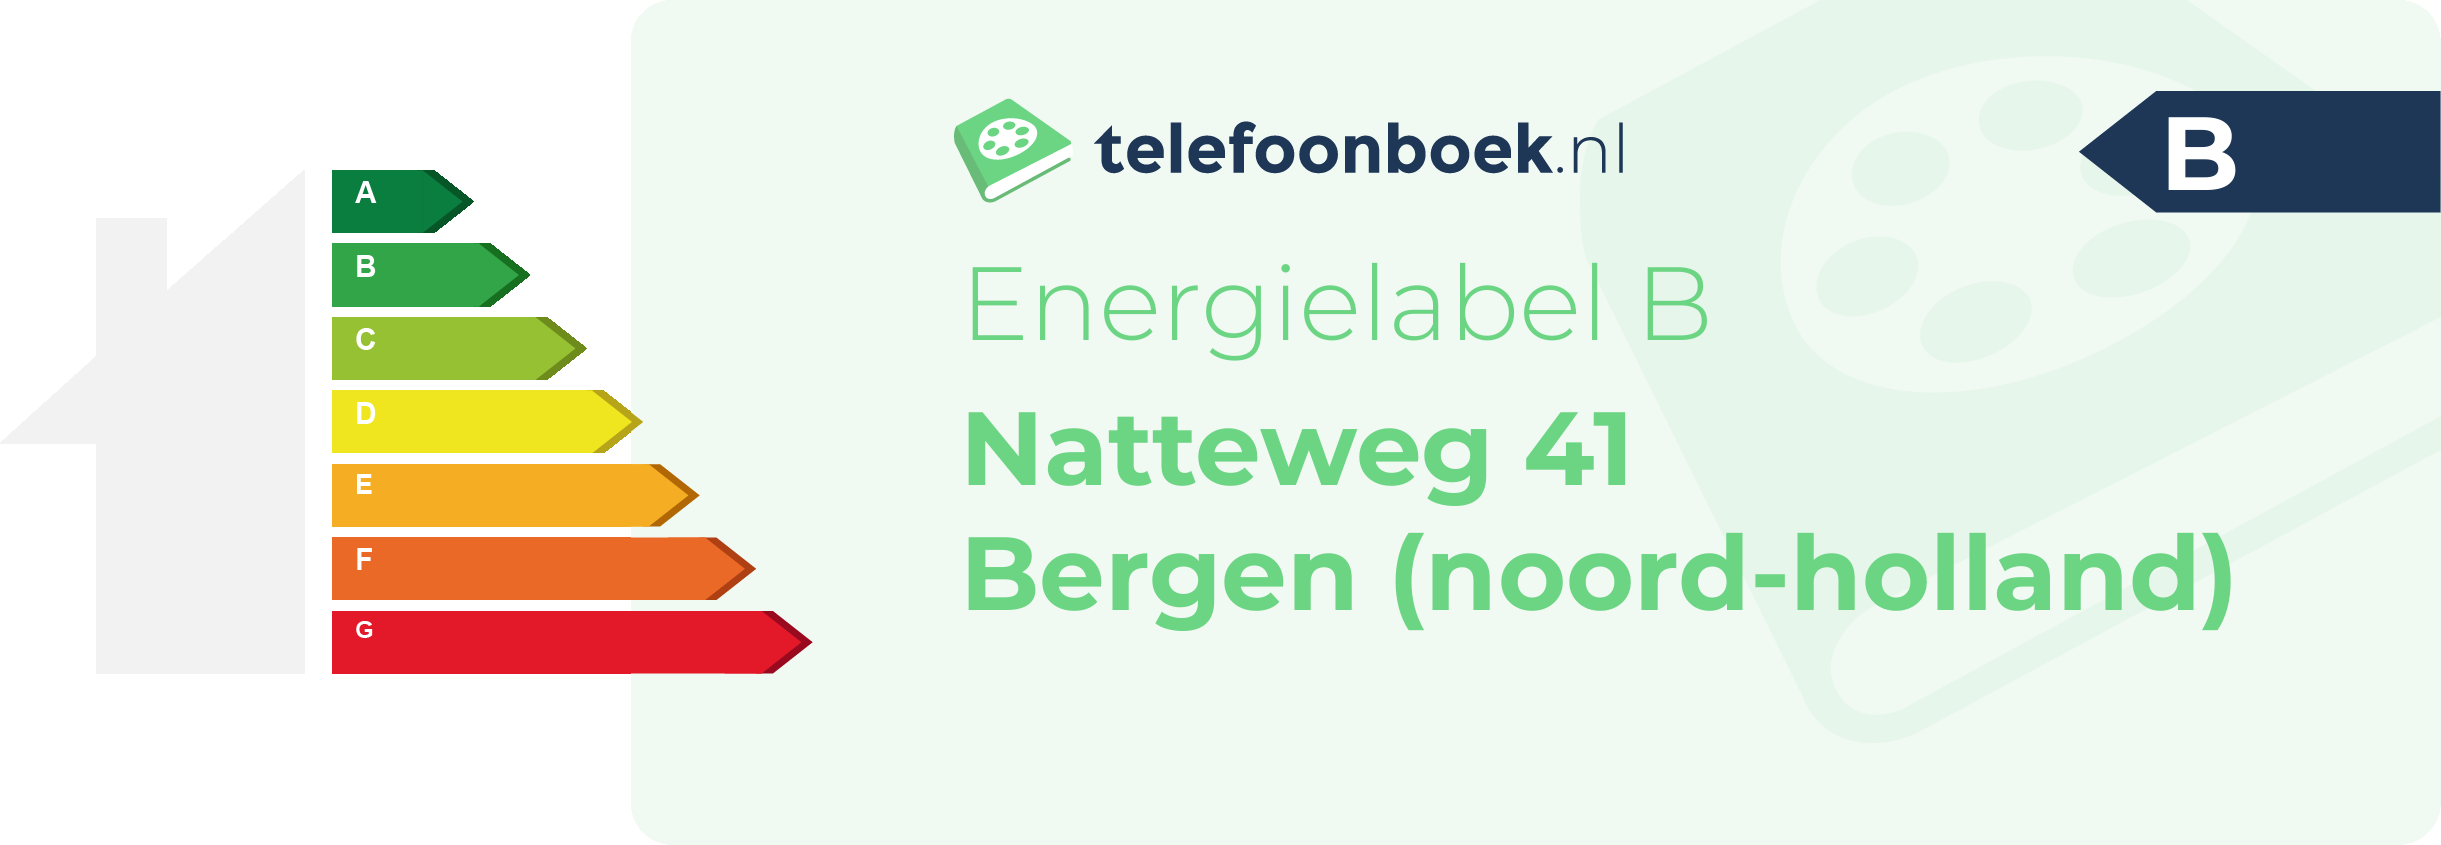 Energielabel Natteweg 41 Bergen (Noord-Holland)